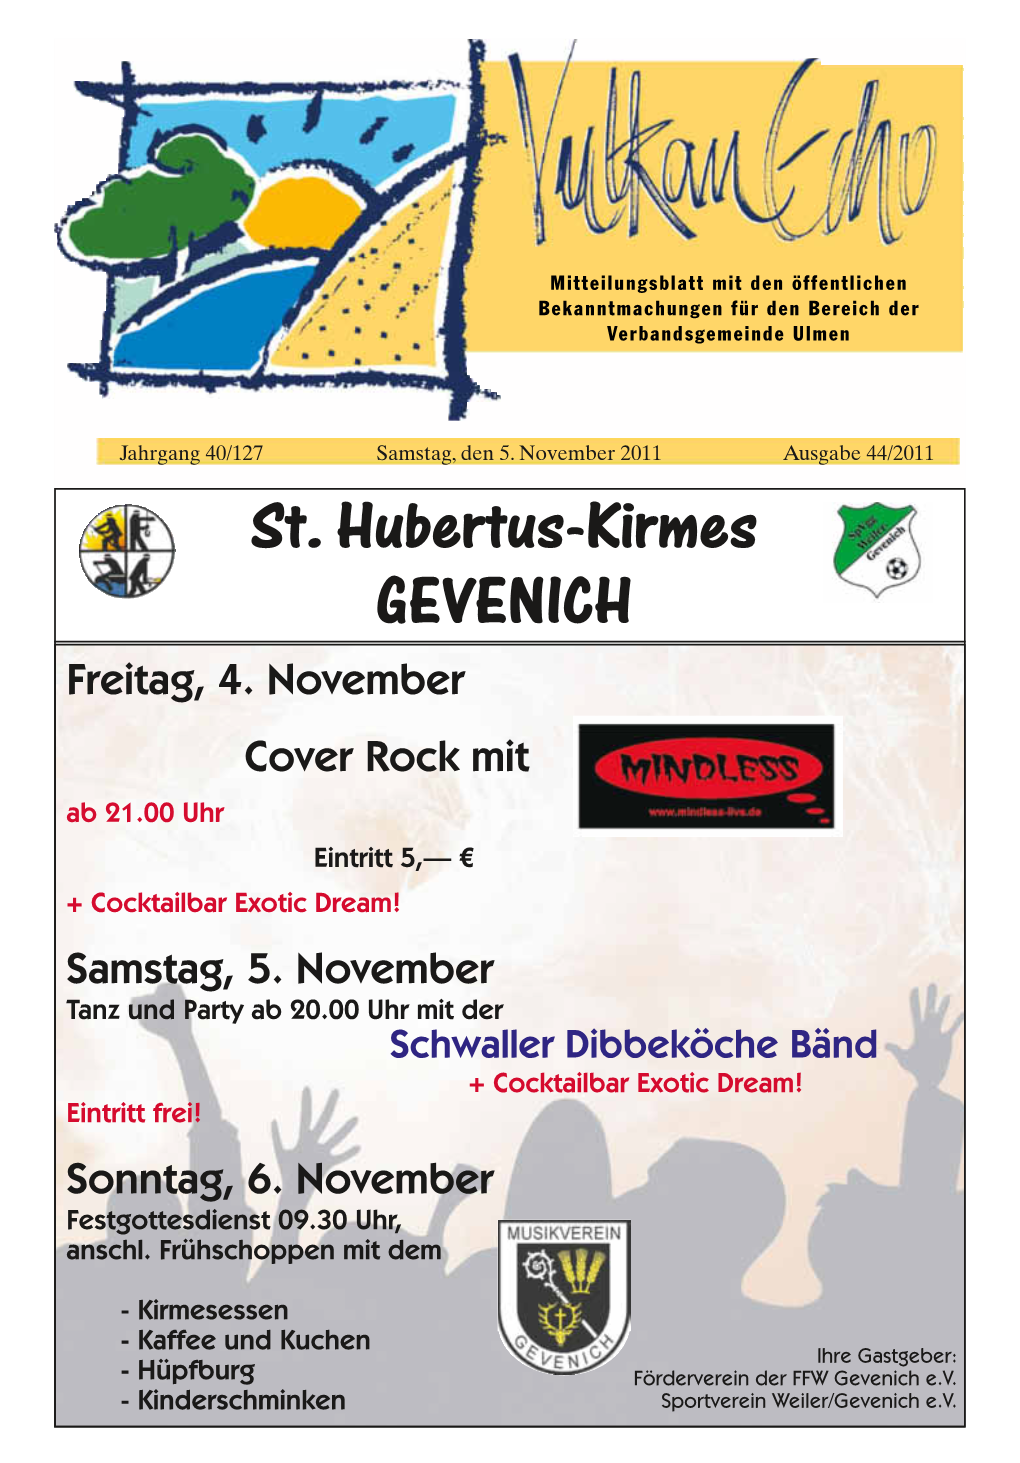 St. Hubertus-Kirmes GEVENICH Freitag, 4